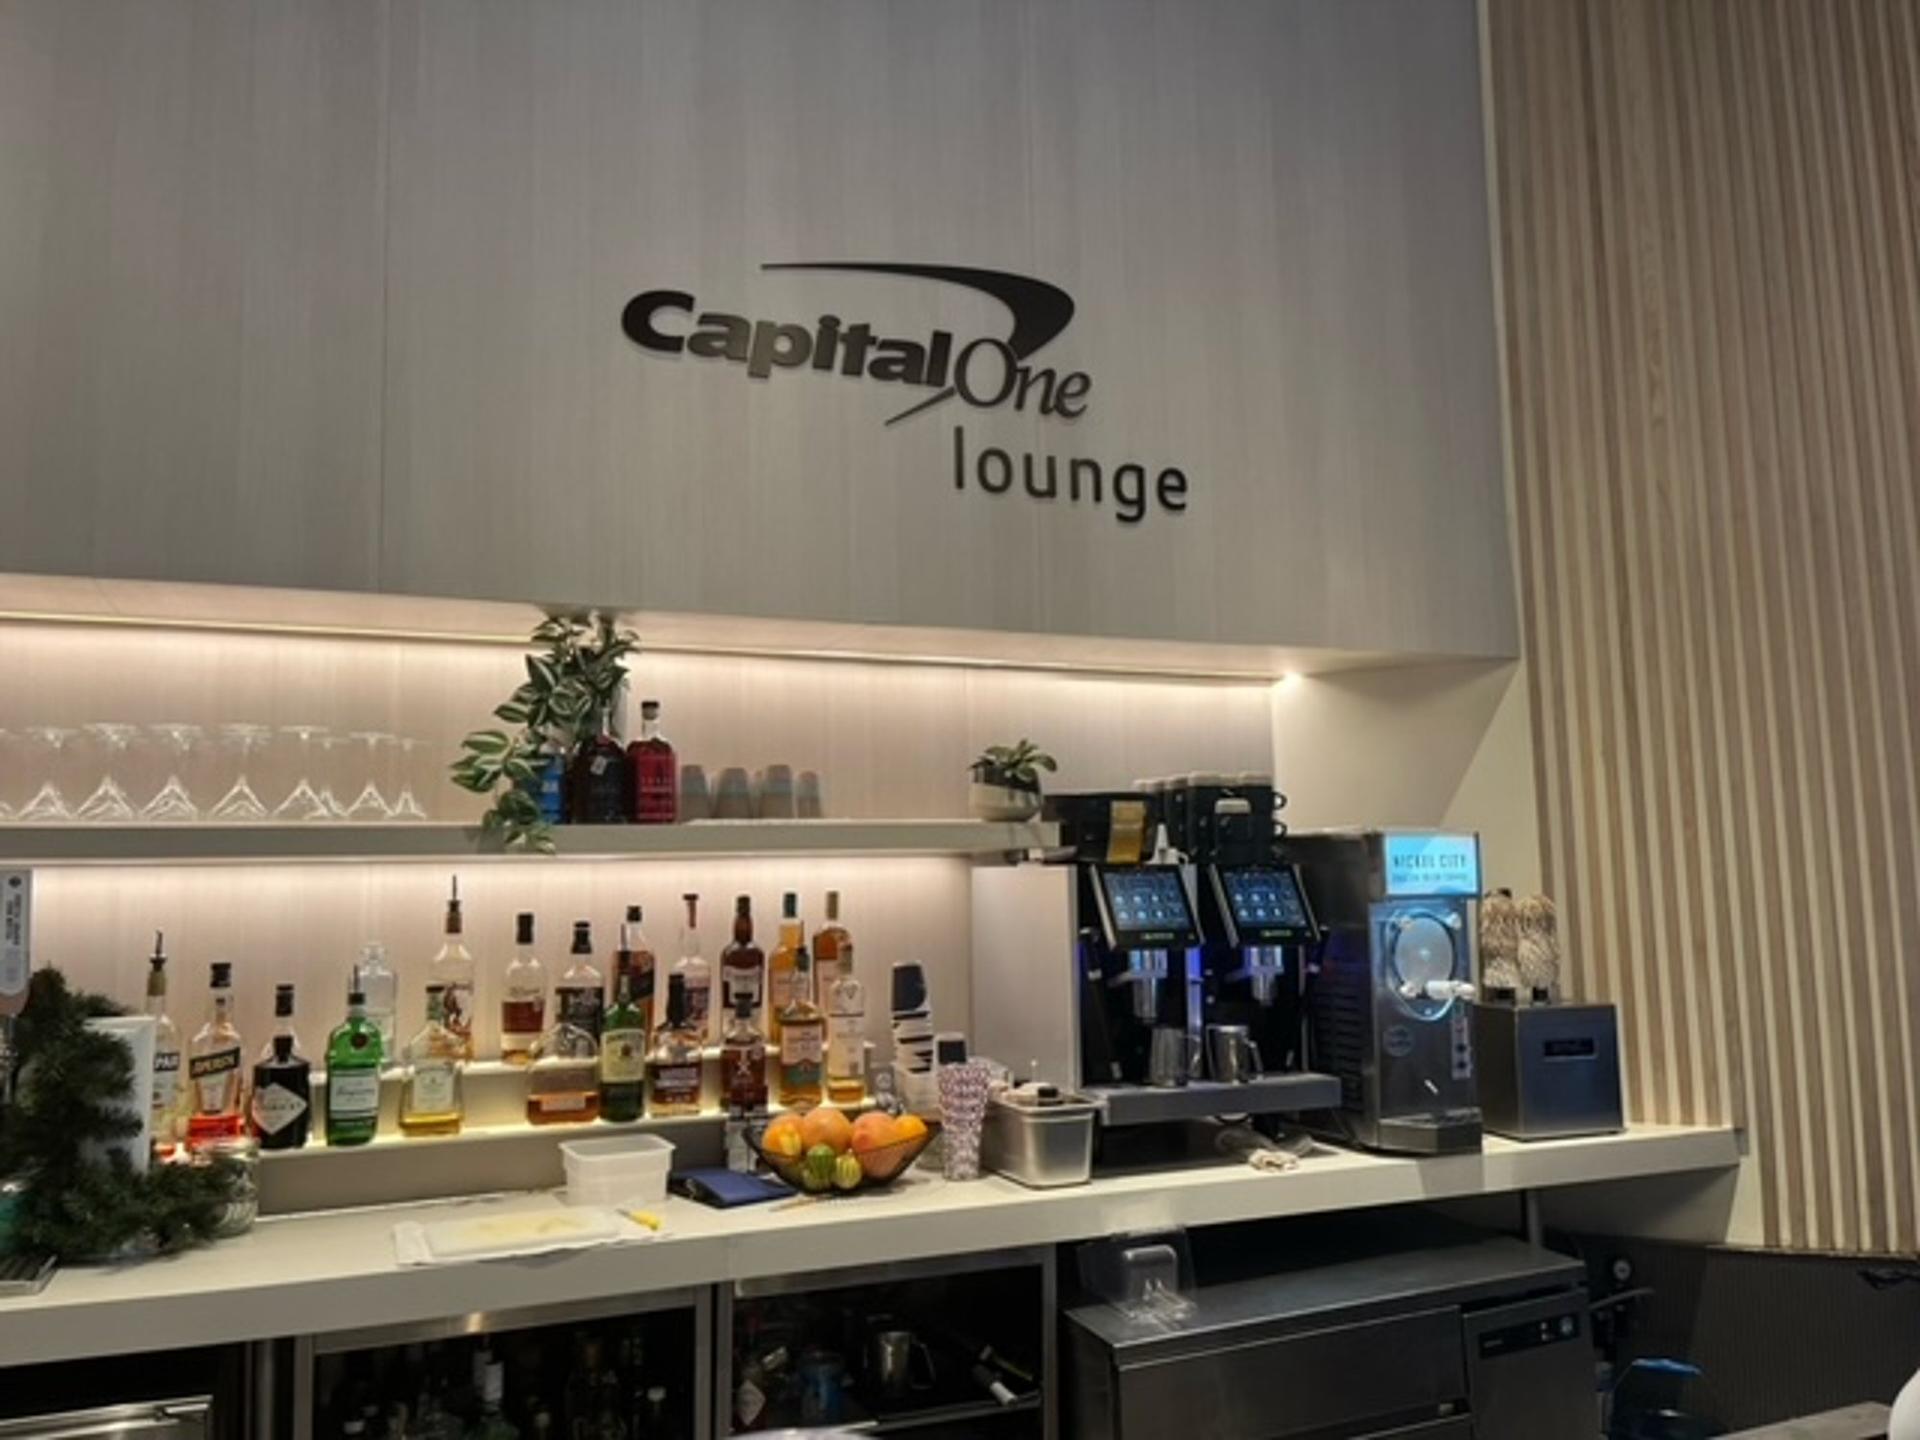 Capital One Lounge image 9 of 16